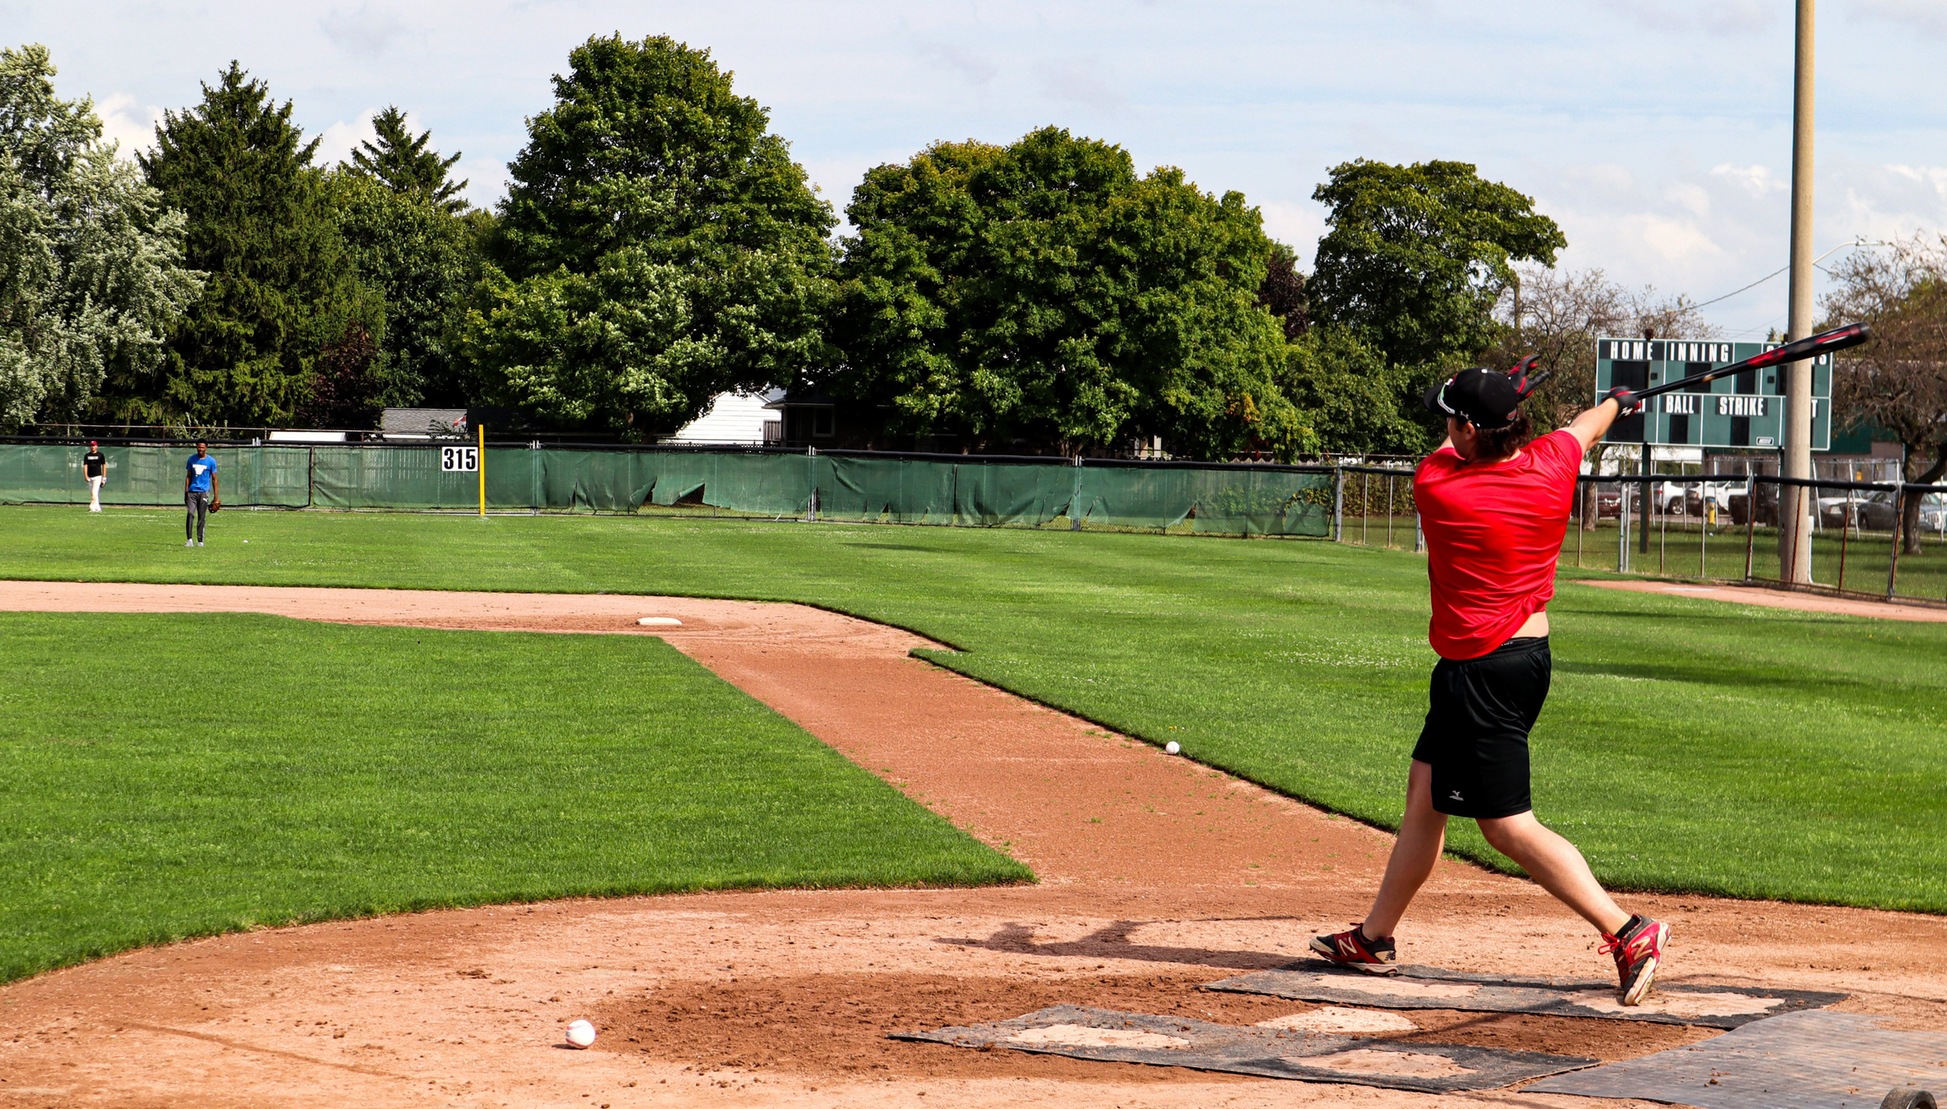 PREVIEW: Men’s Baseball Takes Swing at Seneca in 2019 Debut